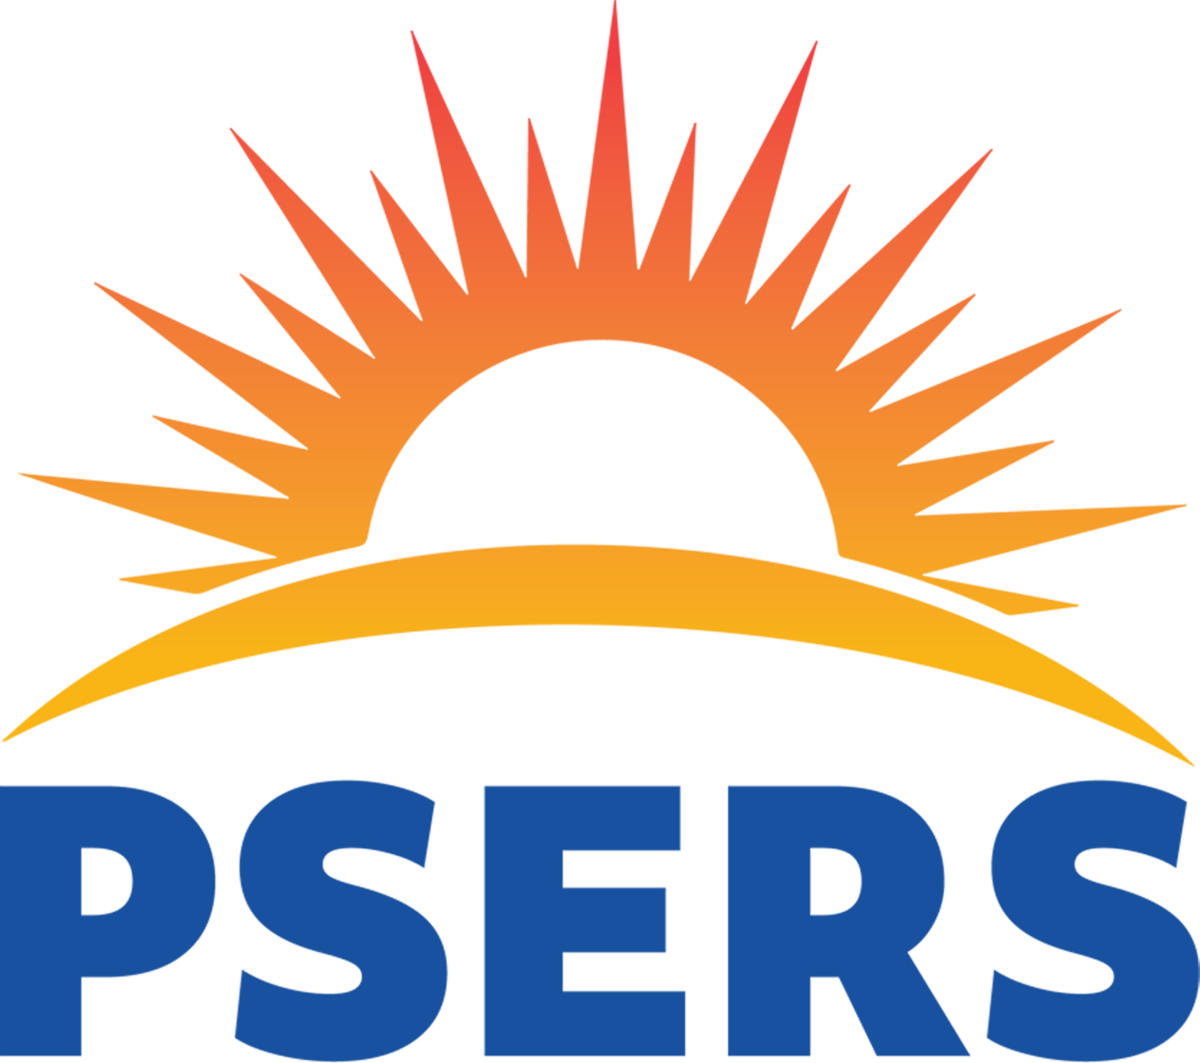 PSERS logo